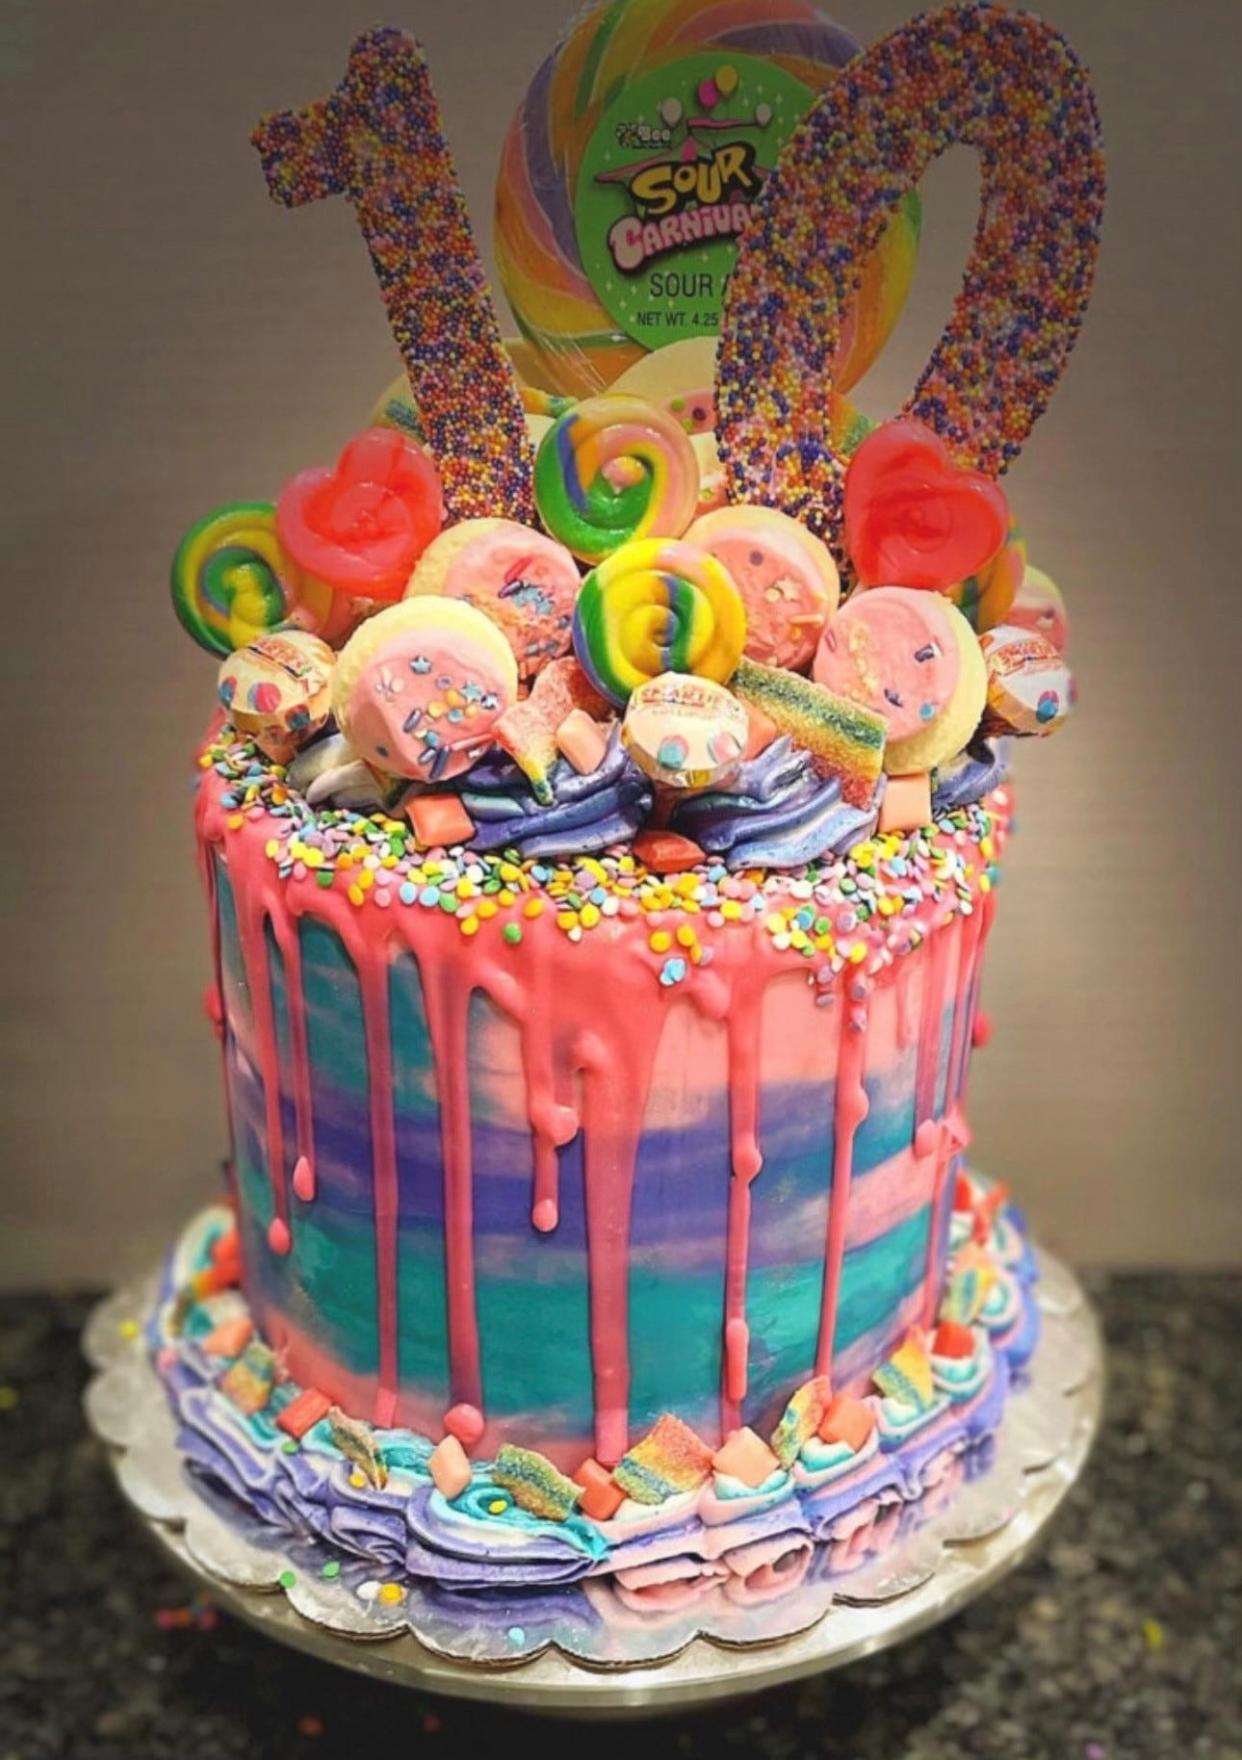 A birthday cake from Jennifer Ennas-Ludewig's bakery, Eat My Cupcake.